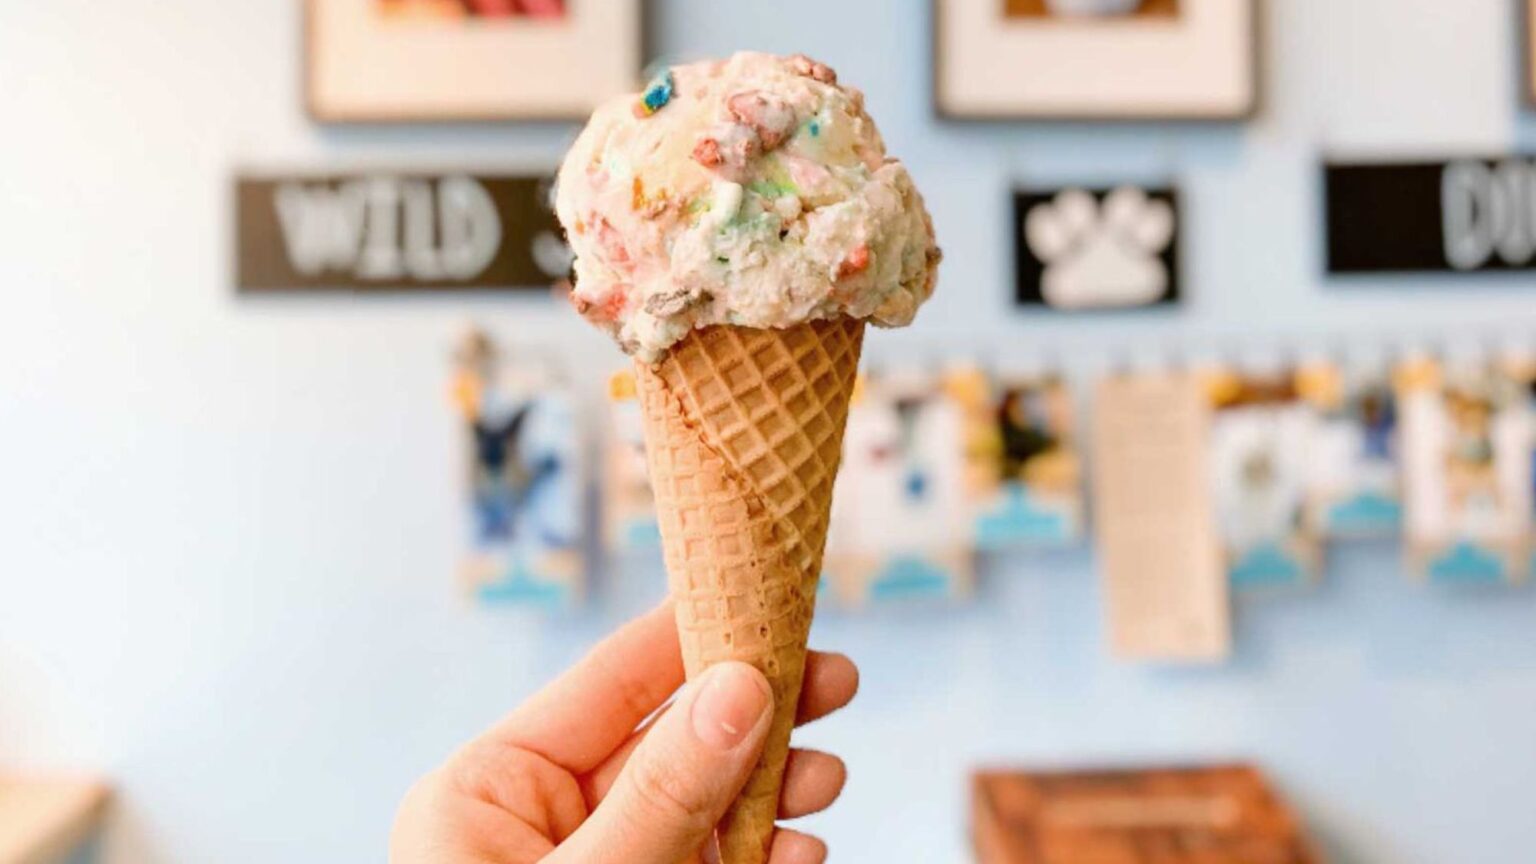 A person holding a cone ice cream in an ice cream shop